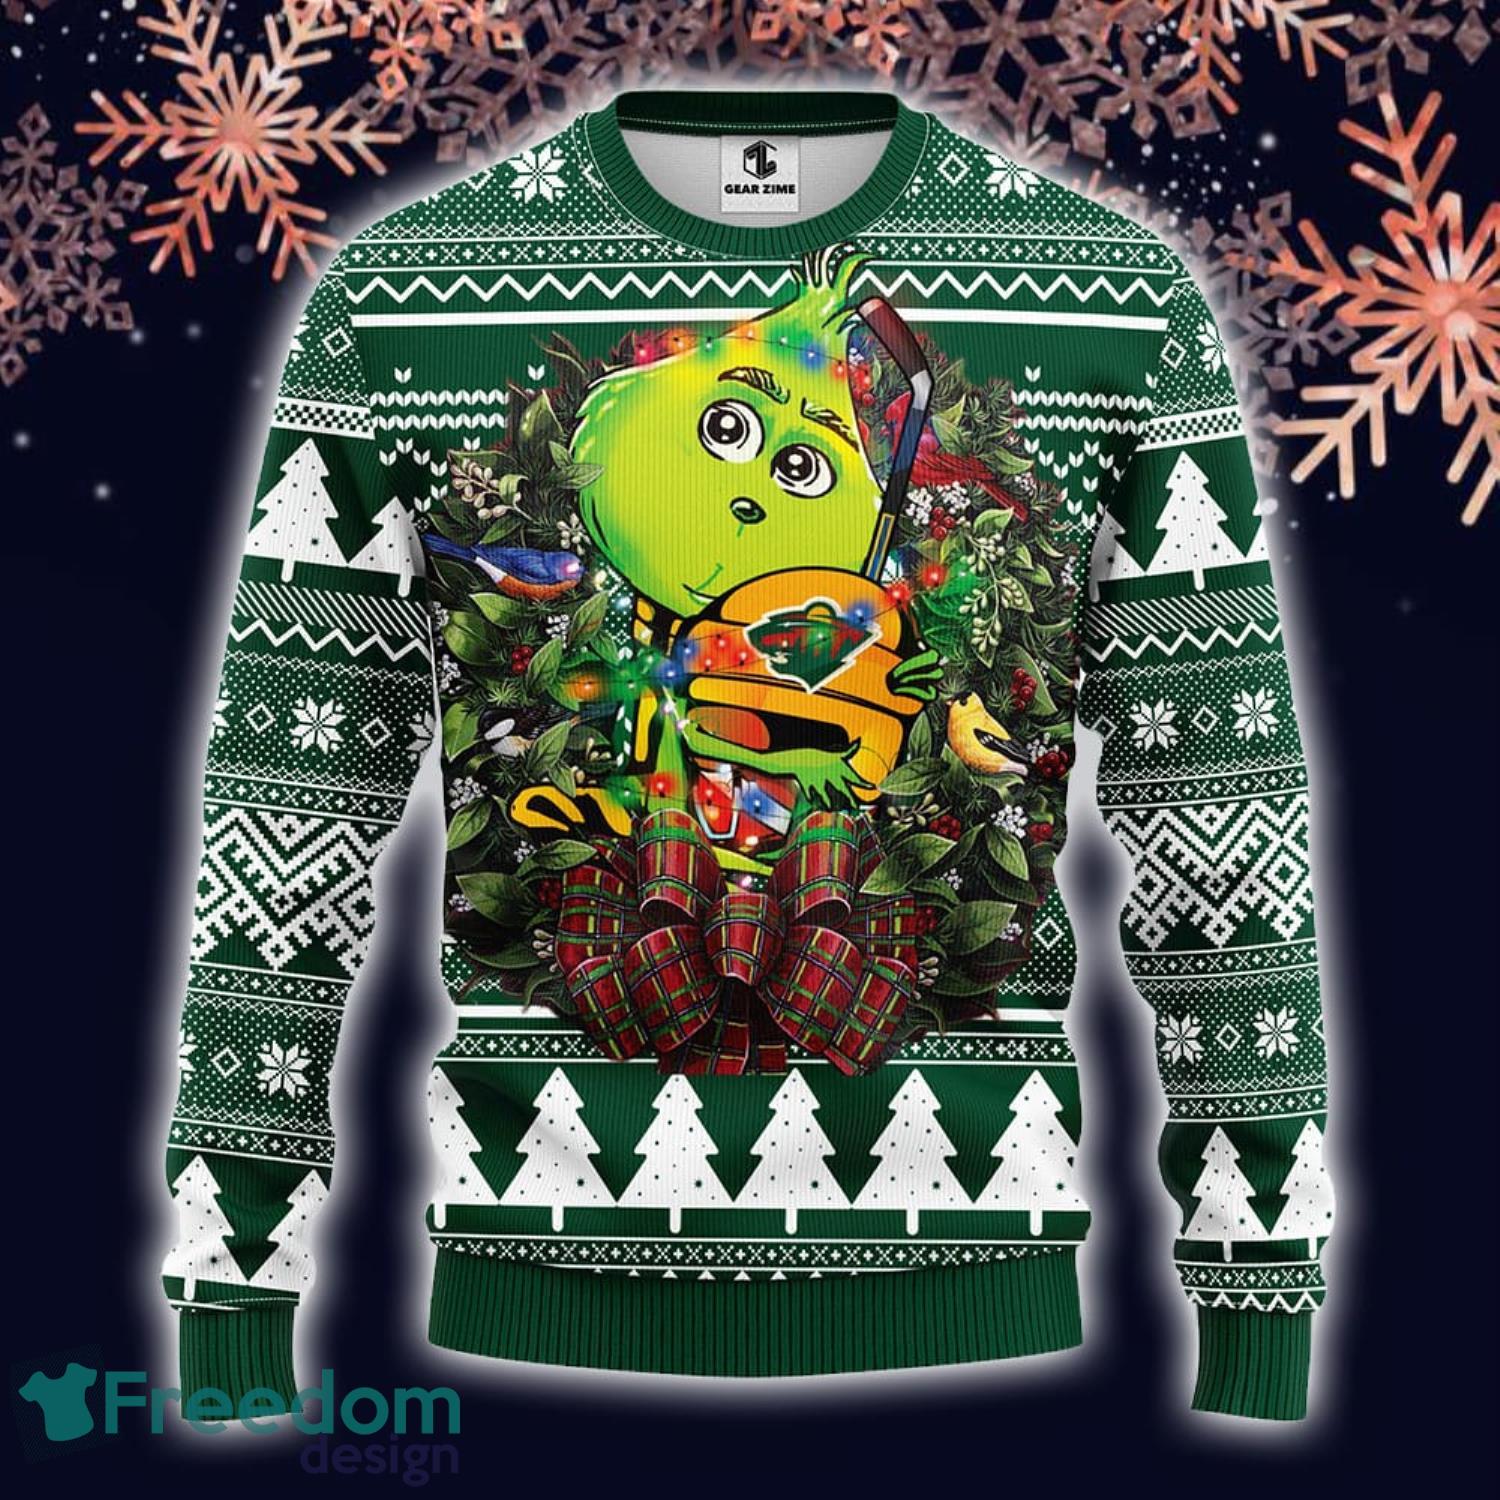 Boston Bruins Pattern Ugly Christmas Sweater Gift - Freedomdesign